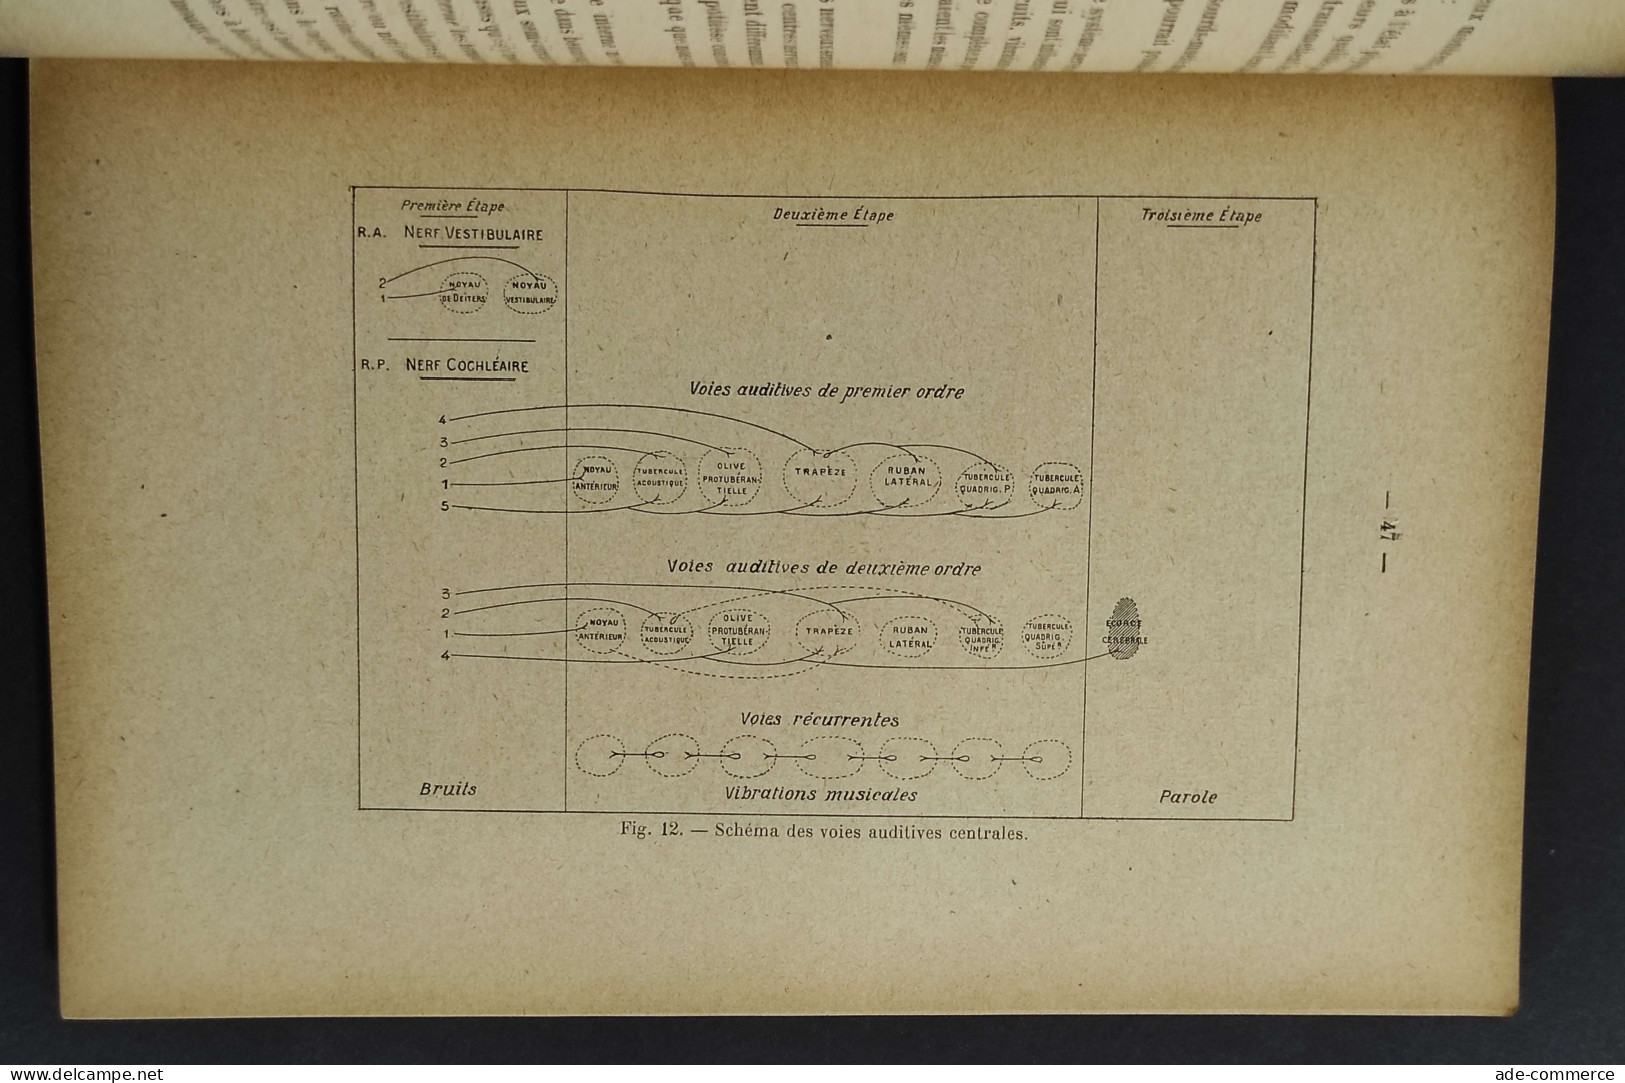 L'Audition Et Ses Variantions - Marage -Ed. Gauthier-Villars - 1923 - Mathematik Und Physik